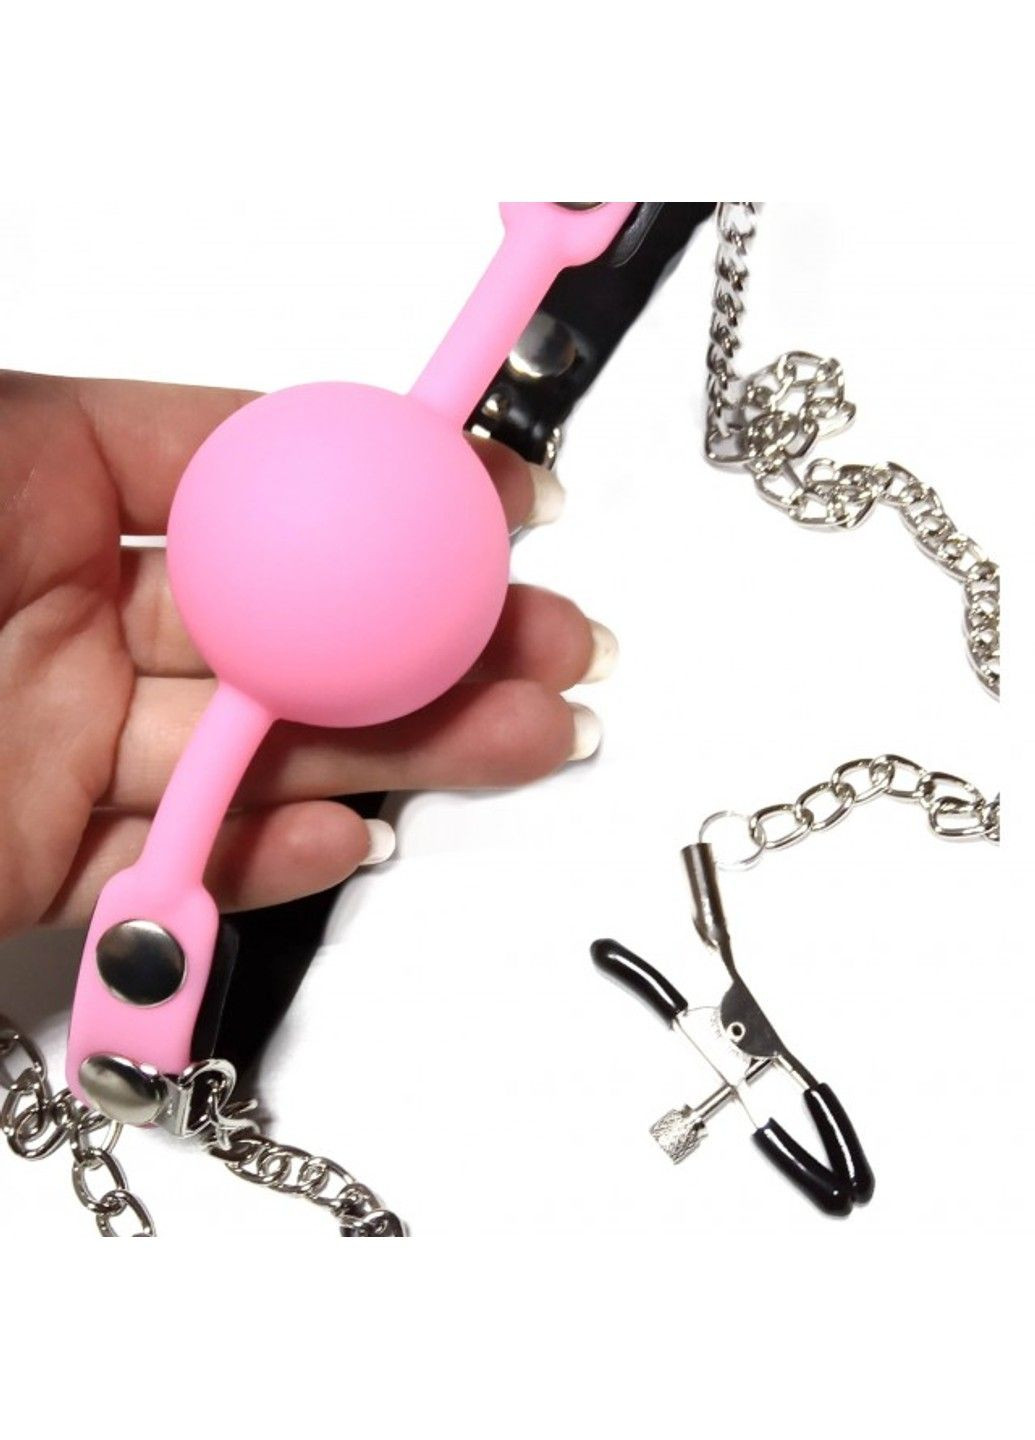 Кляп із затискачами на соски Locking gag with nipple clamps black/pink DS Fetish (292011515)